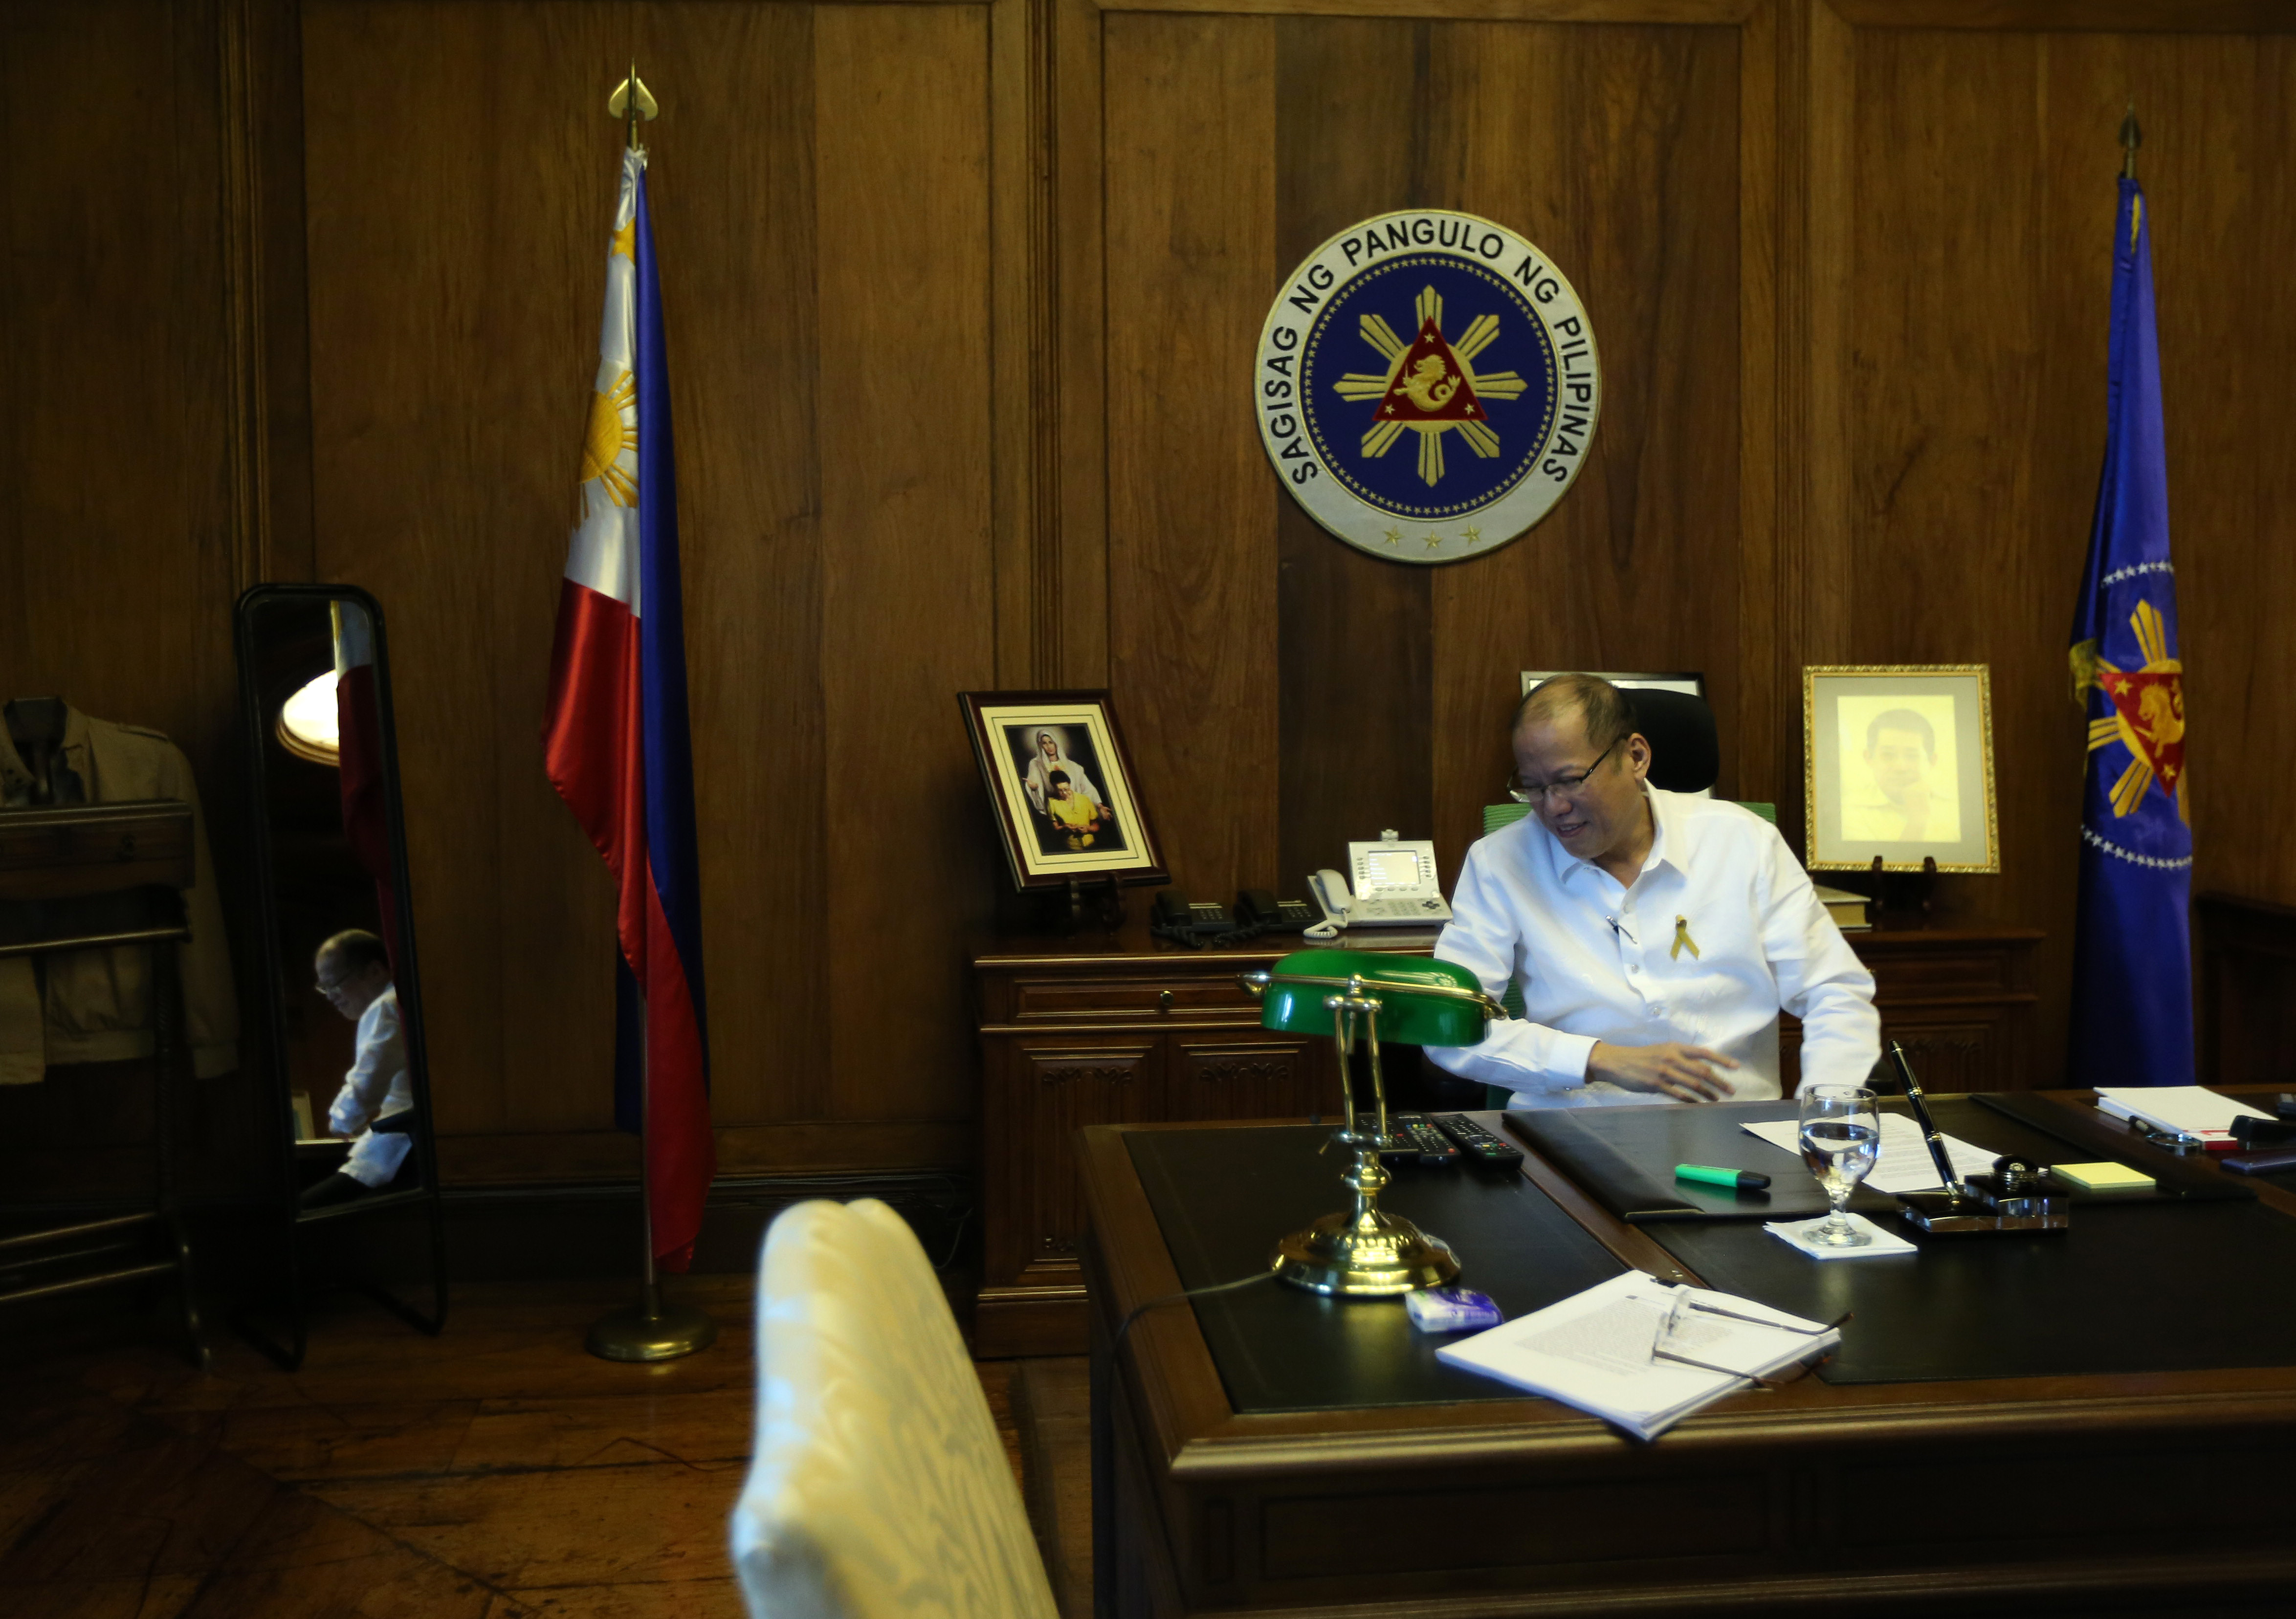 IN PHOTOS: President Aquino's last day in Malacañang